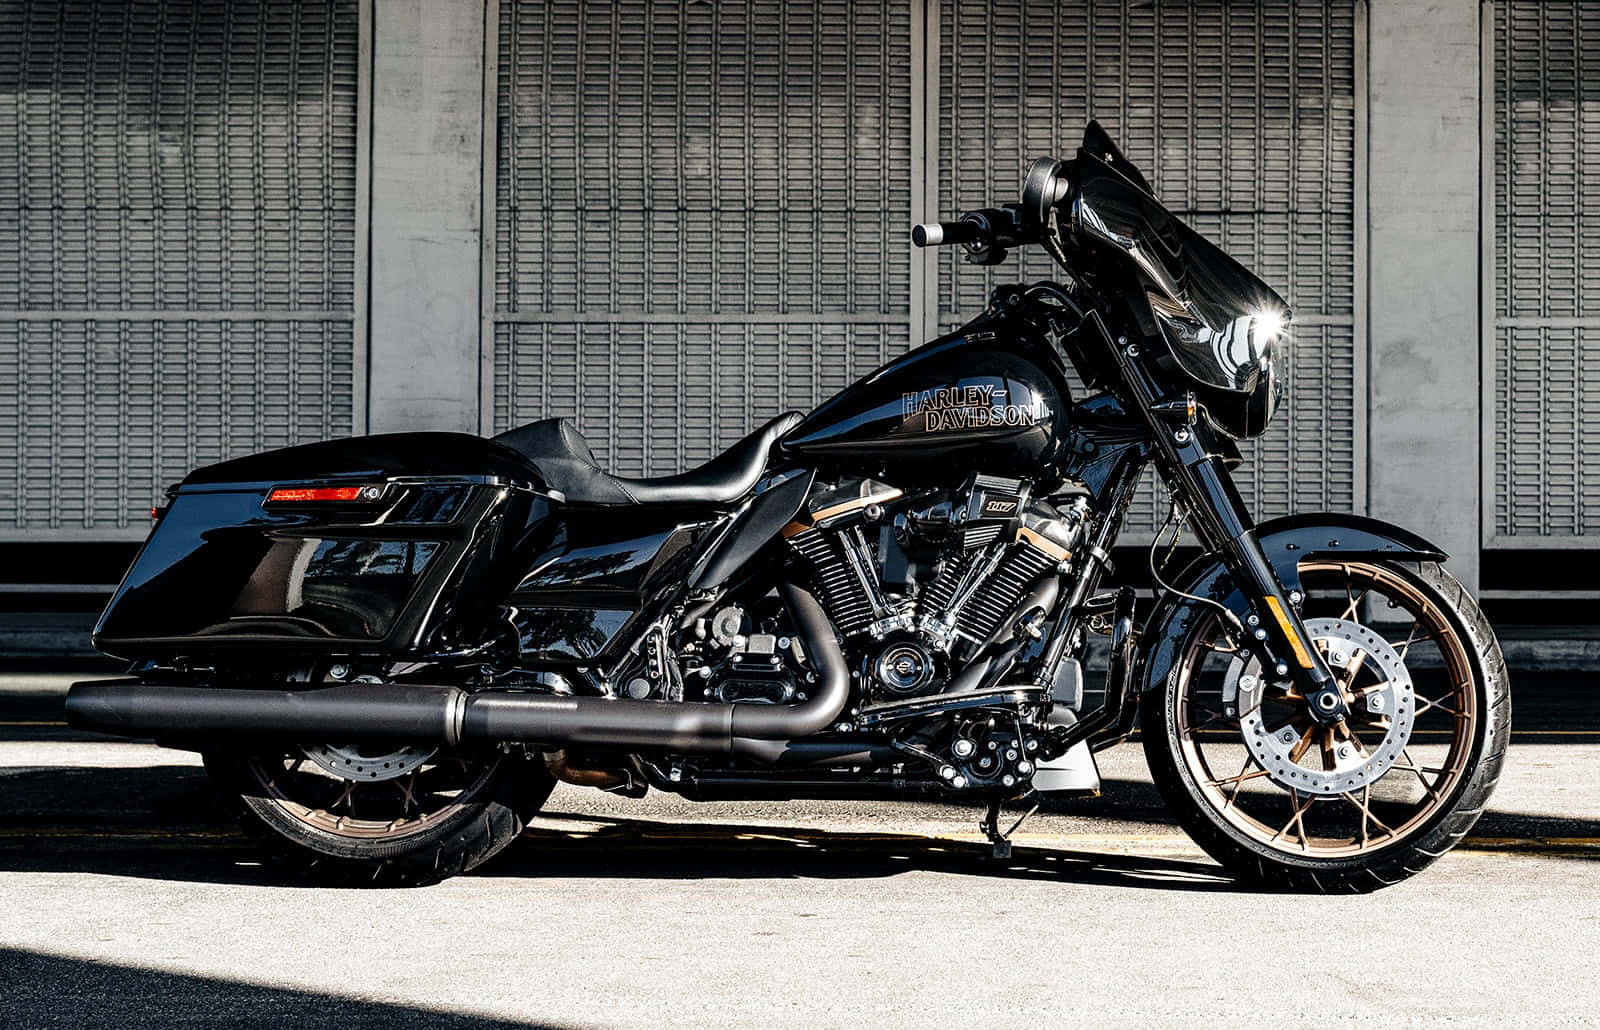 Adventure Awaits on your Harley Davidson